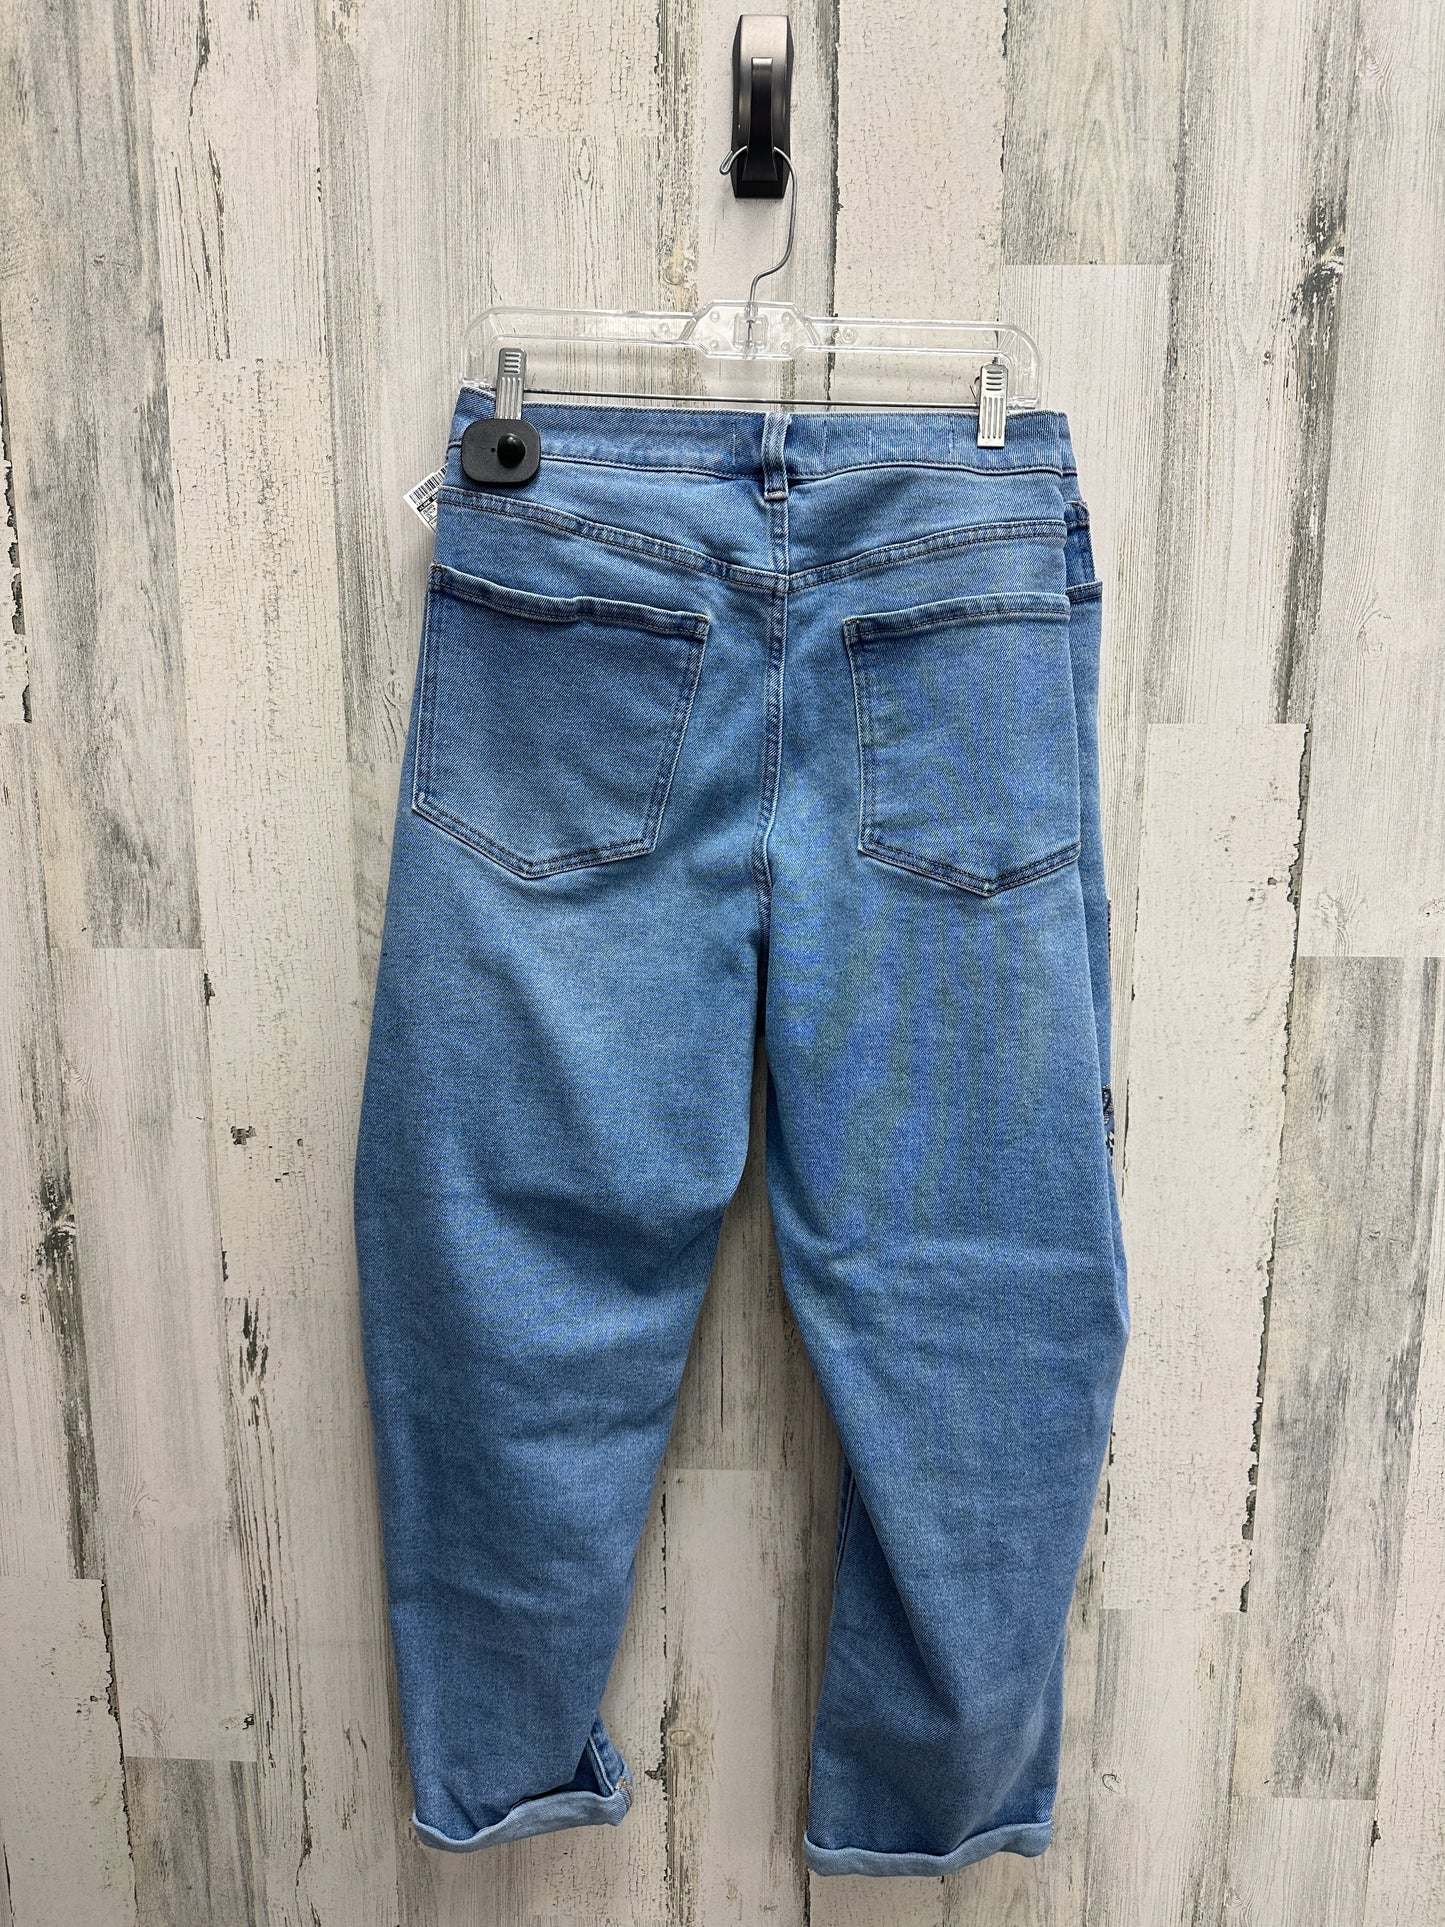 Jeans Skinny By Lane Bryant  Size: 20